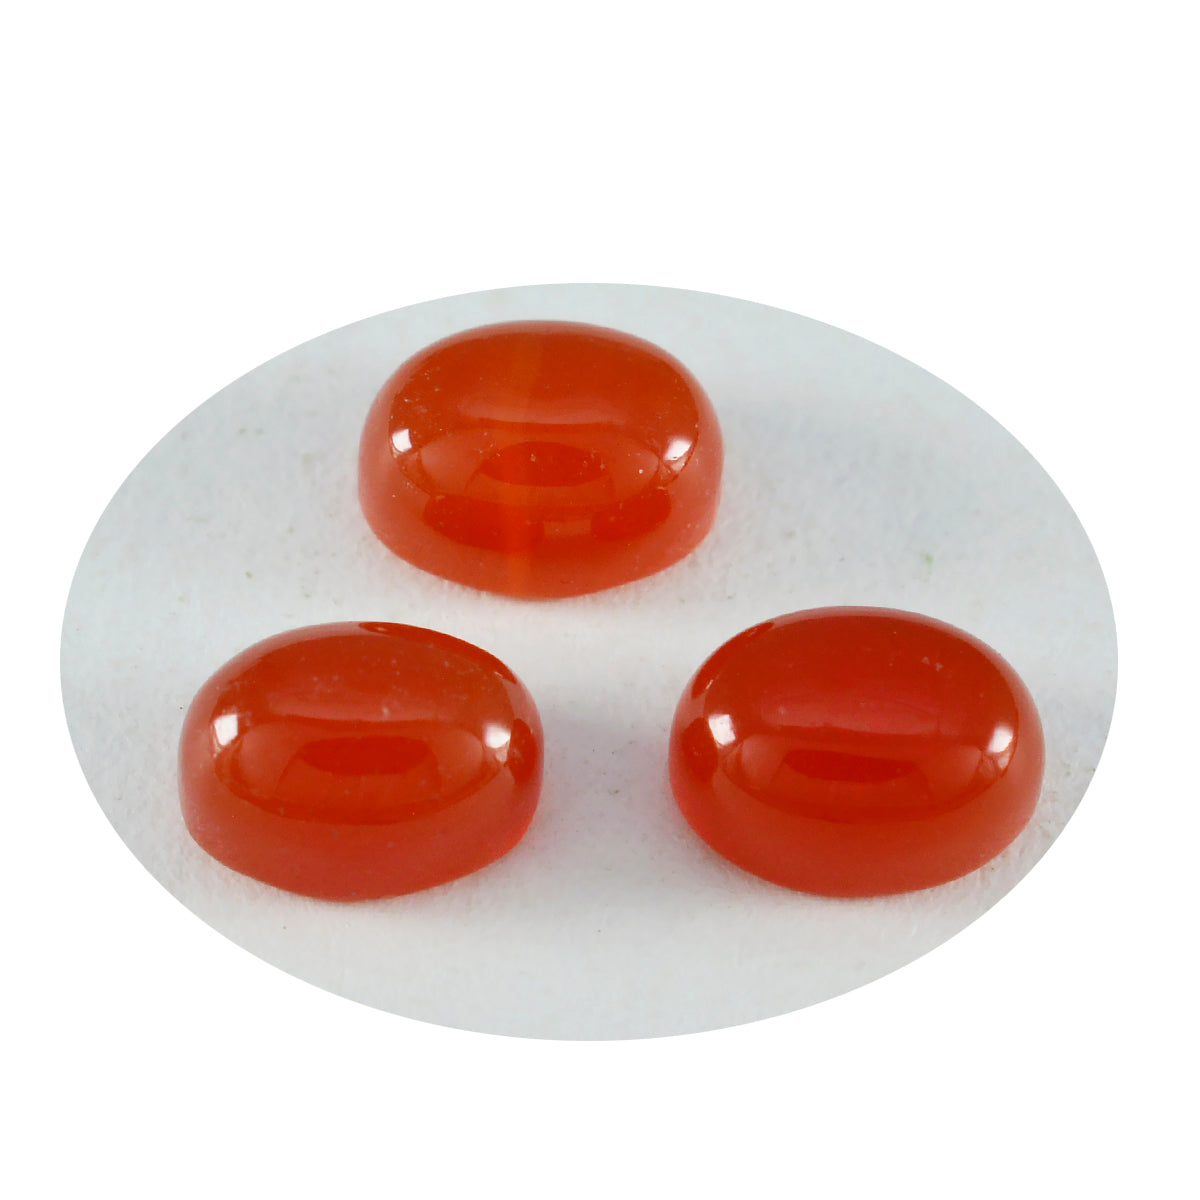 Riyogems 1PC Rode Onyx Cabochon 10x12 mm Ovale vorm Goede kwaliteit steen